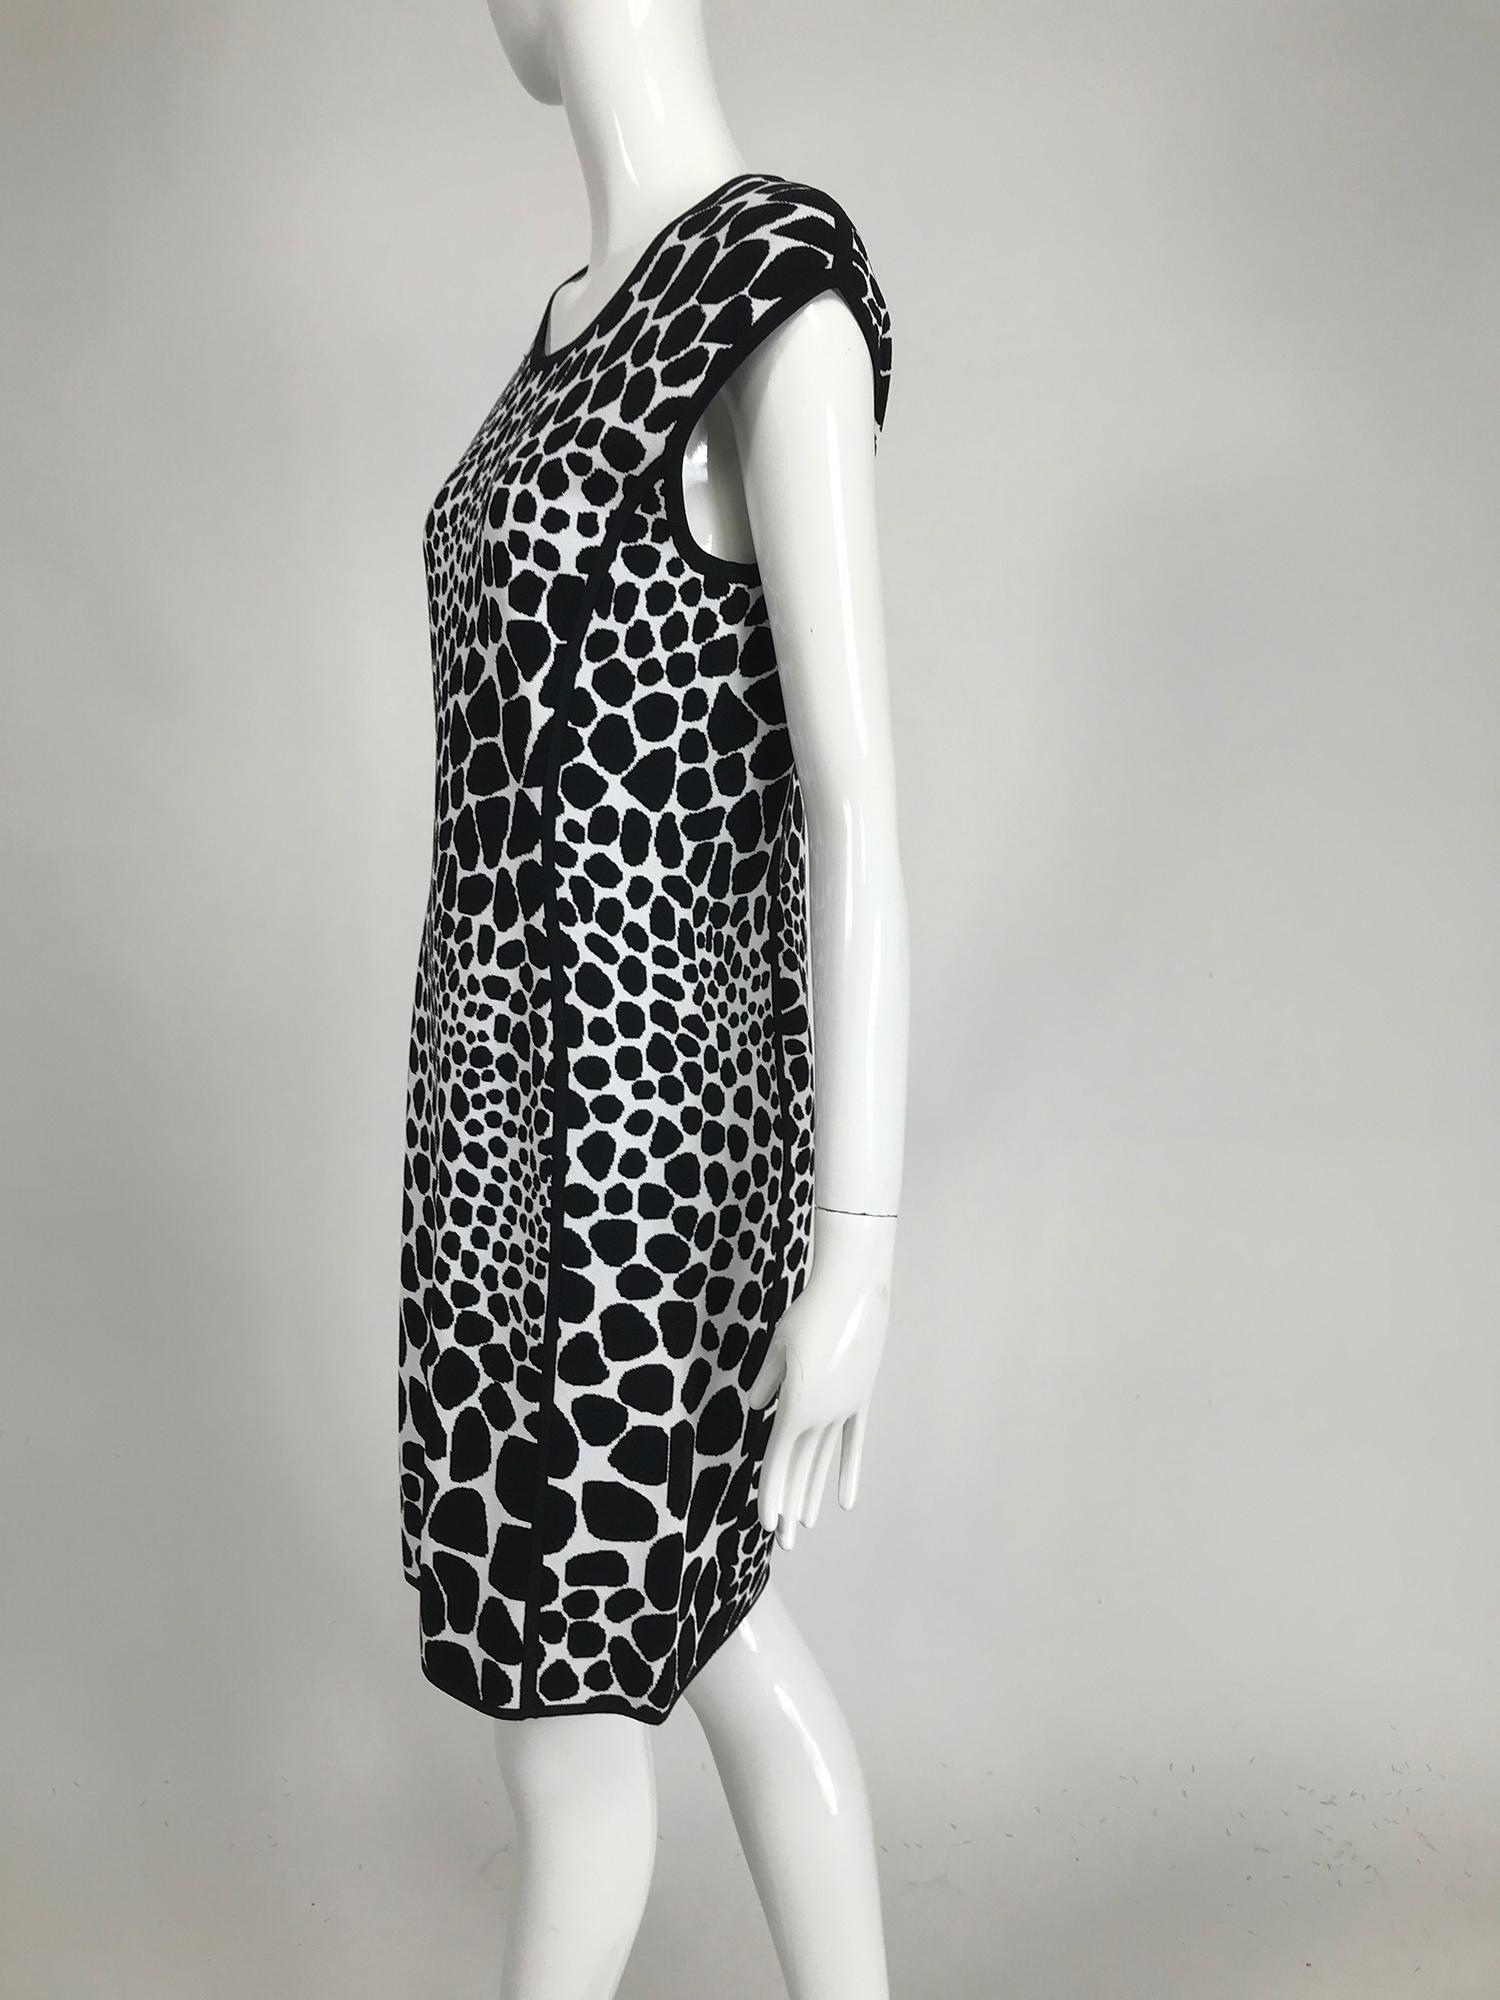 michael kors black and white dress